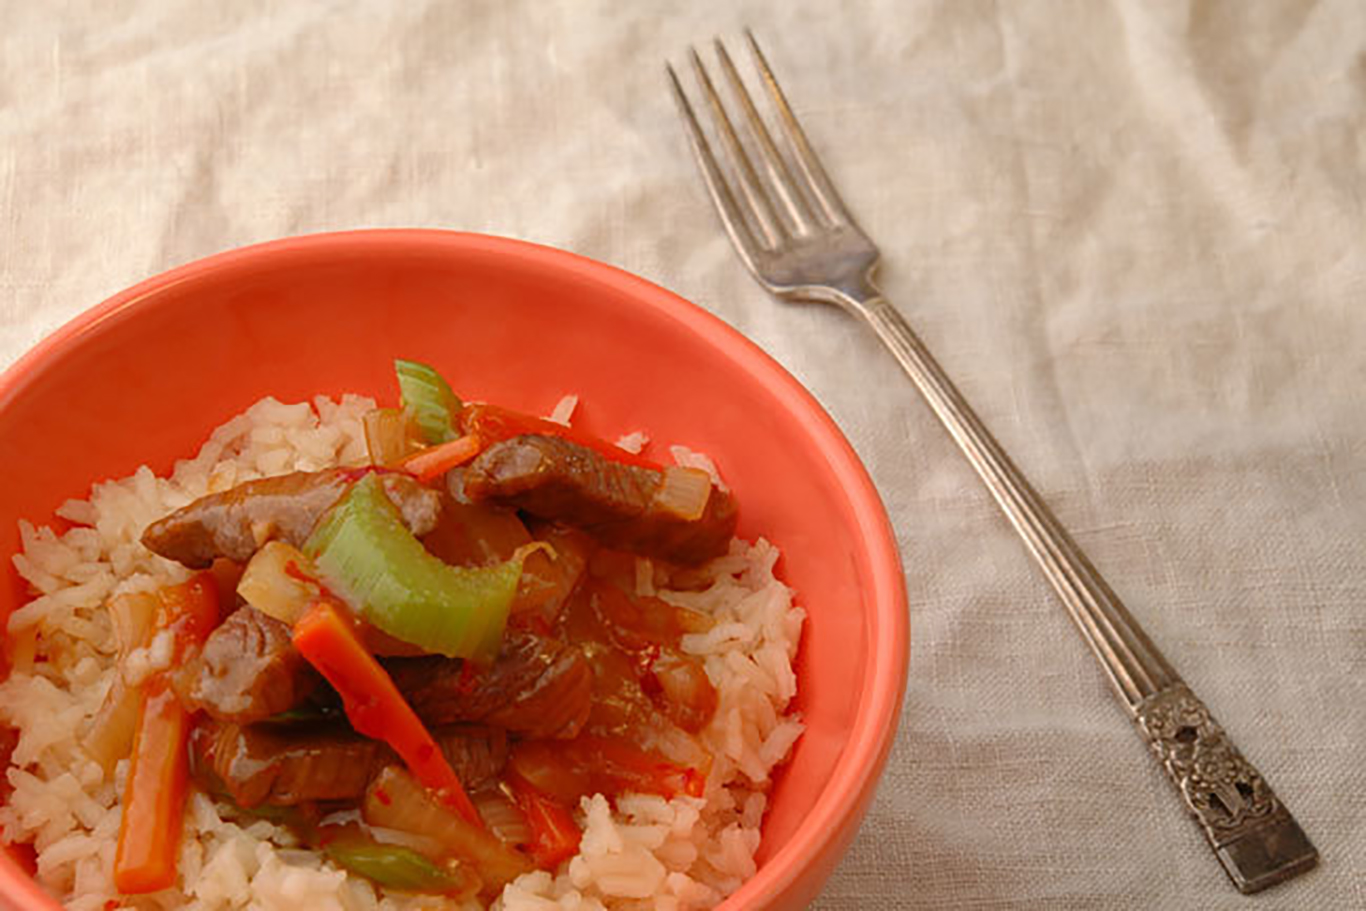 Pan-Asian Grilling Glaze Recipe for Venison